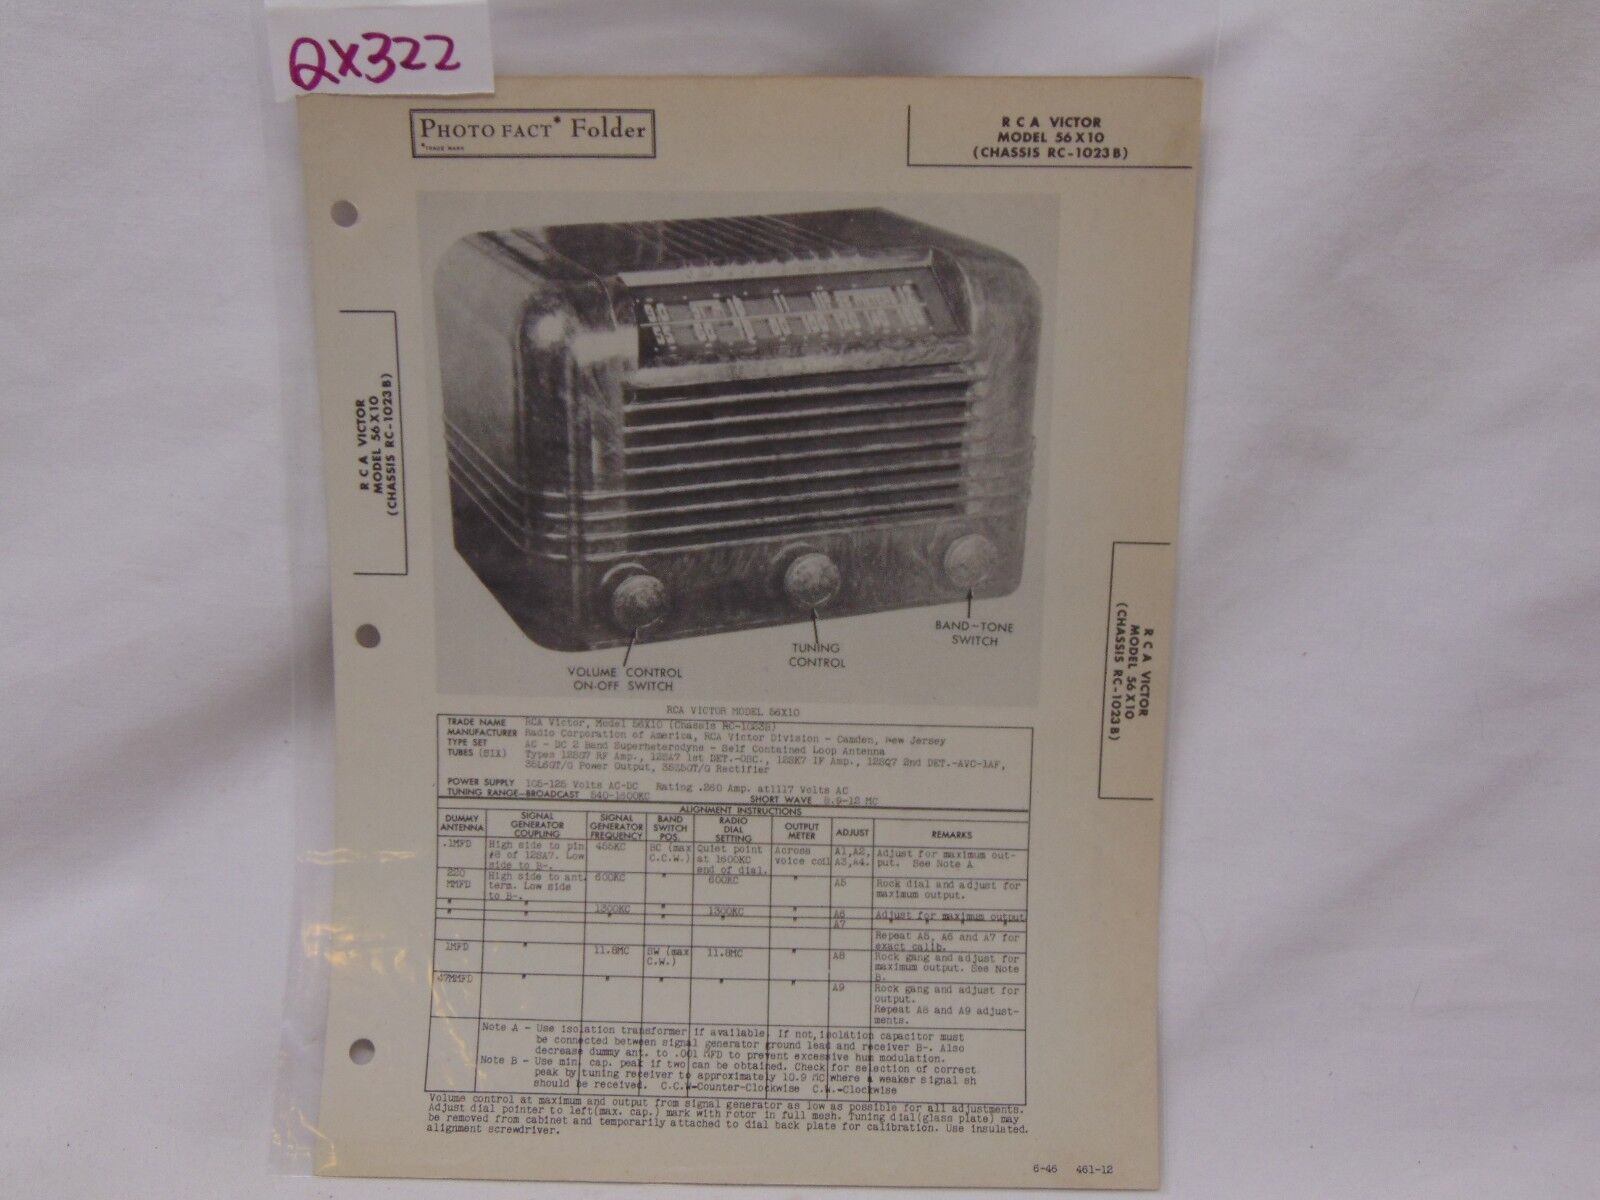  SAMS PHOTOFACT FOLDER MANUAL & SCHEMATIC RCA VICTOR RADIO 56X10 CH. RC-1023B